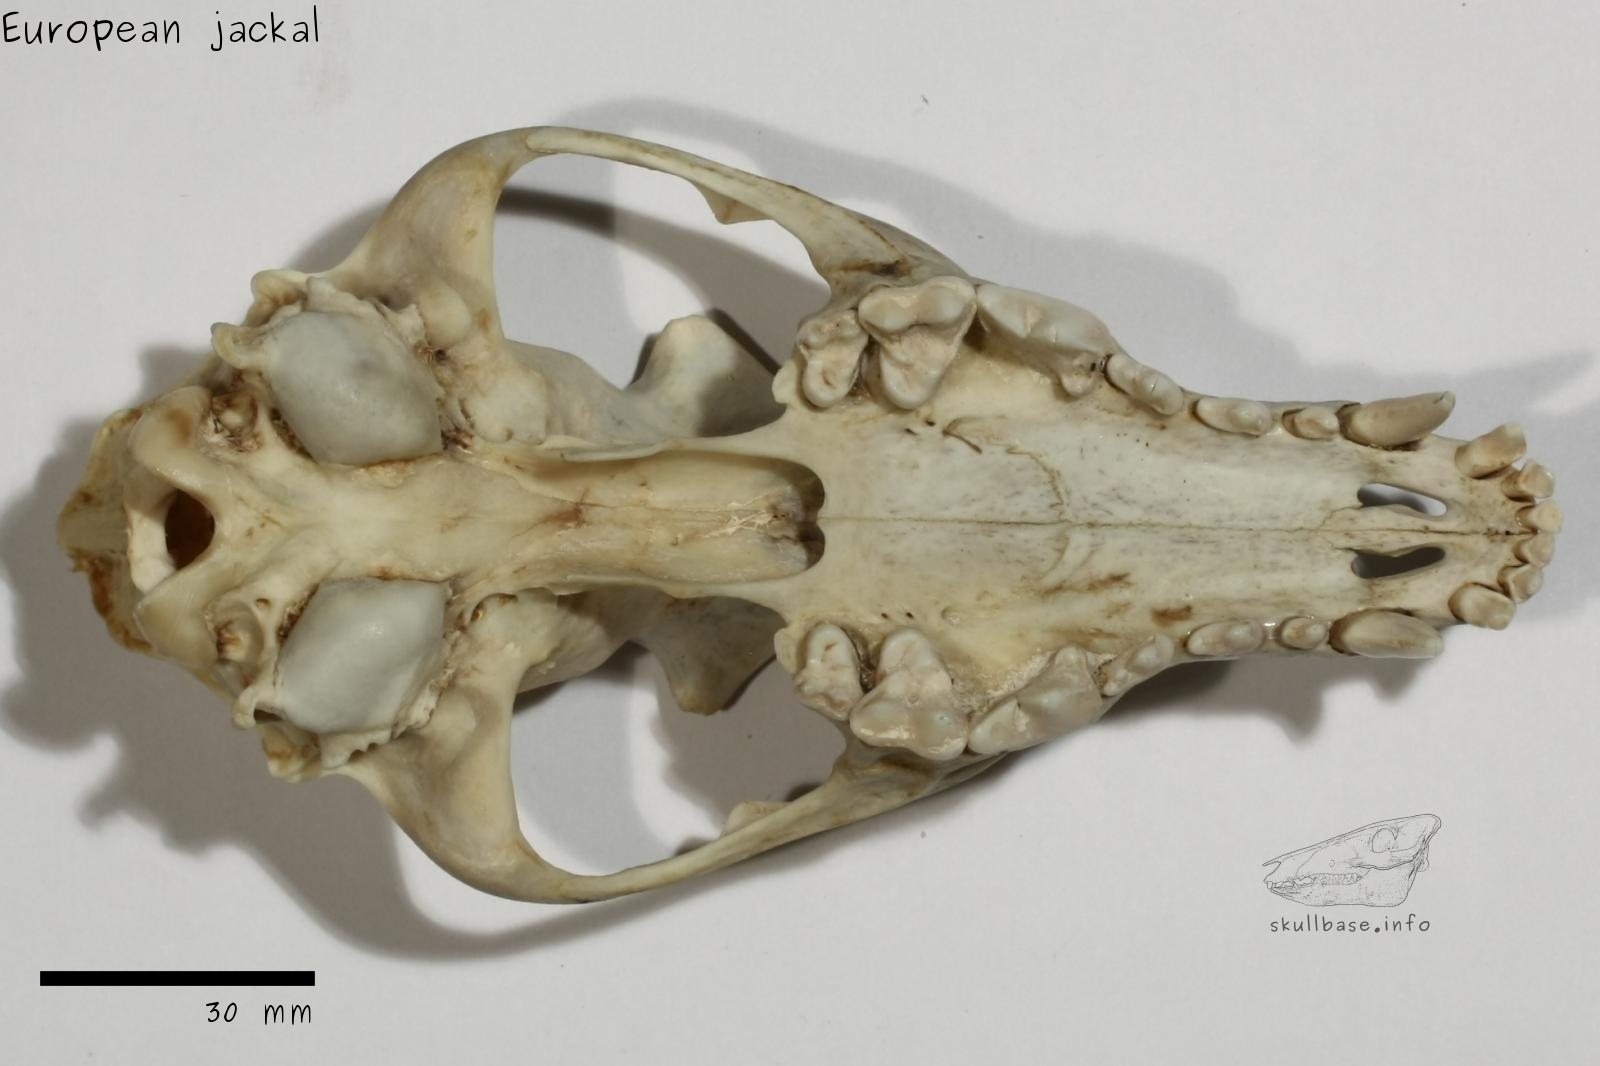 European jackal (Canis aureus moreoticus) skull ventral view